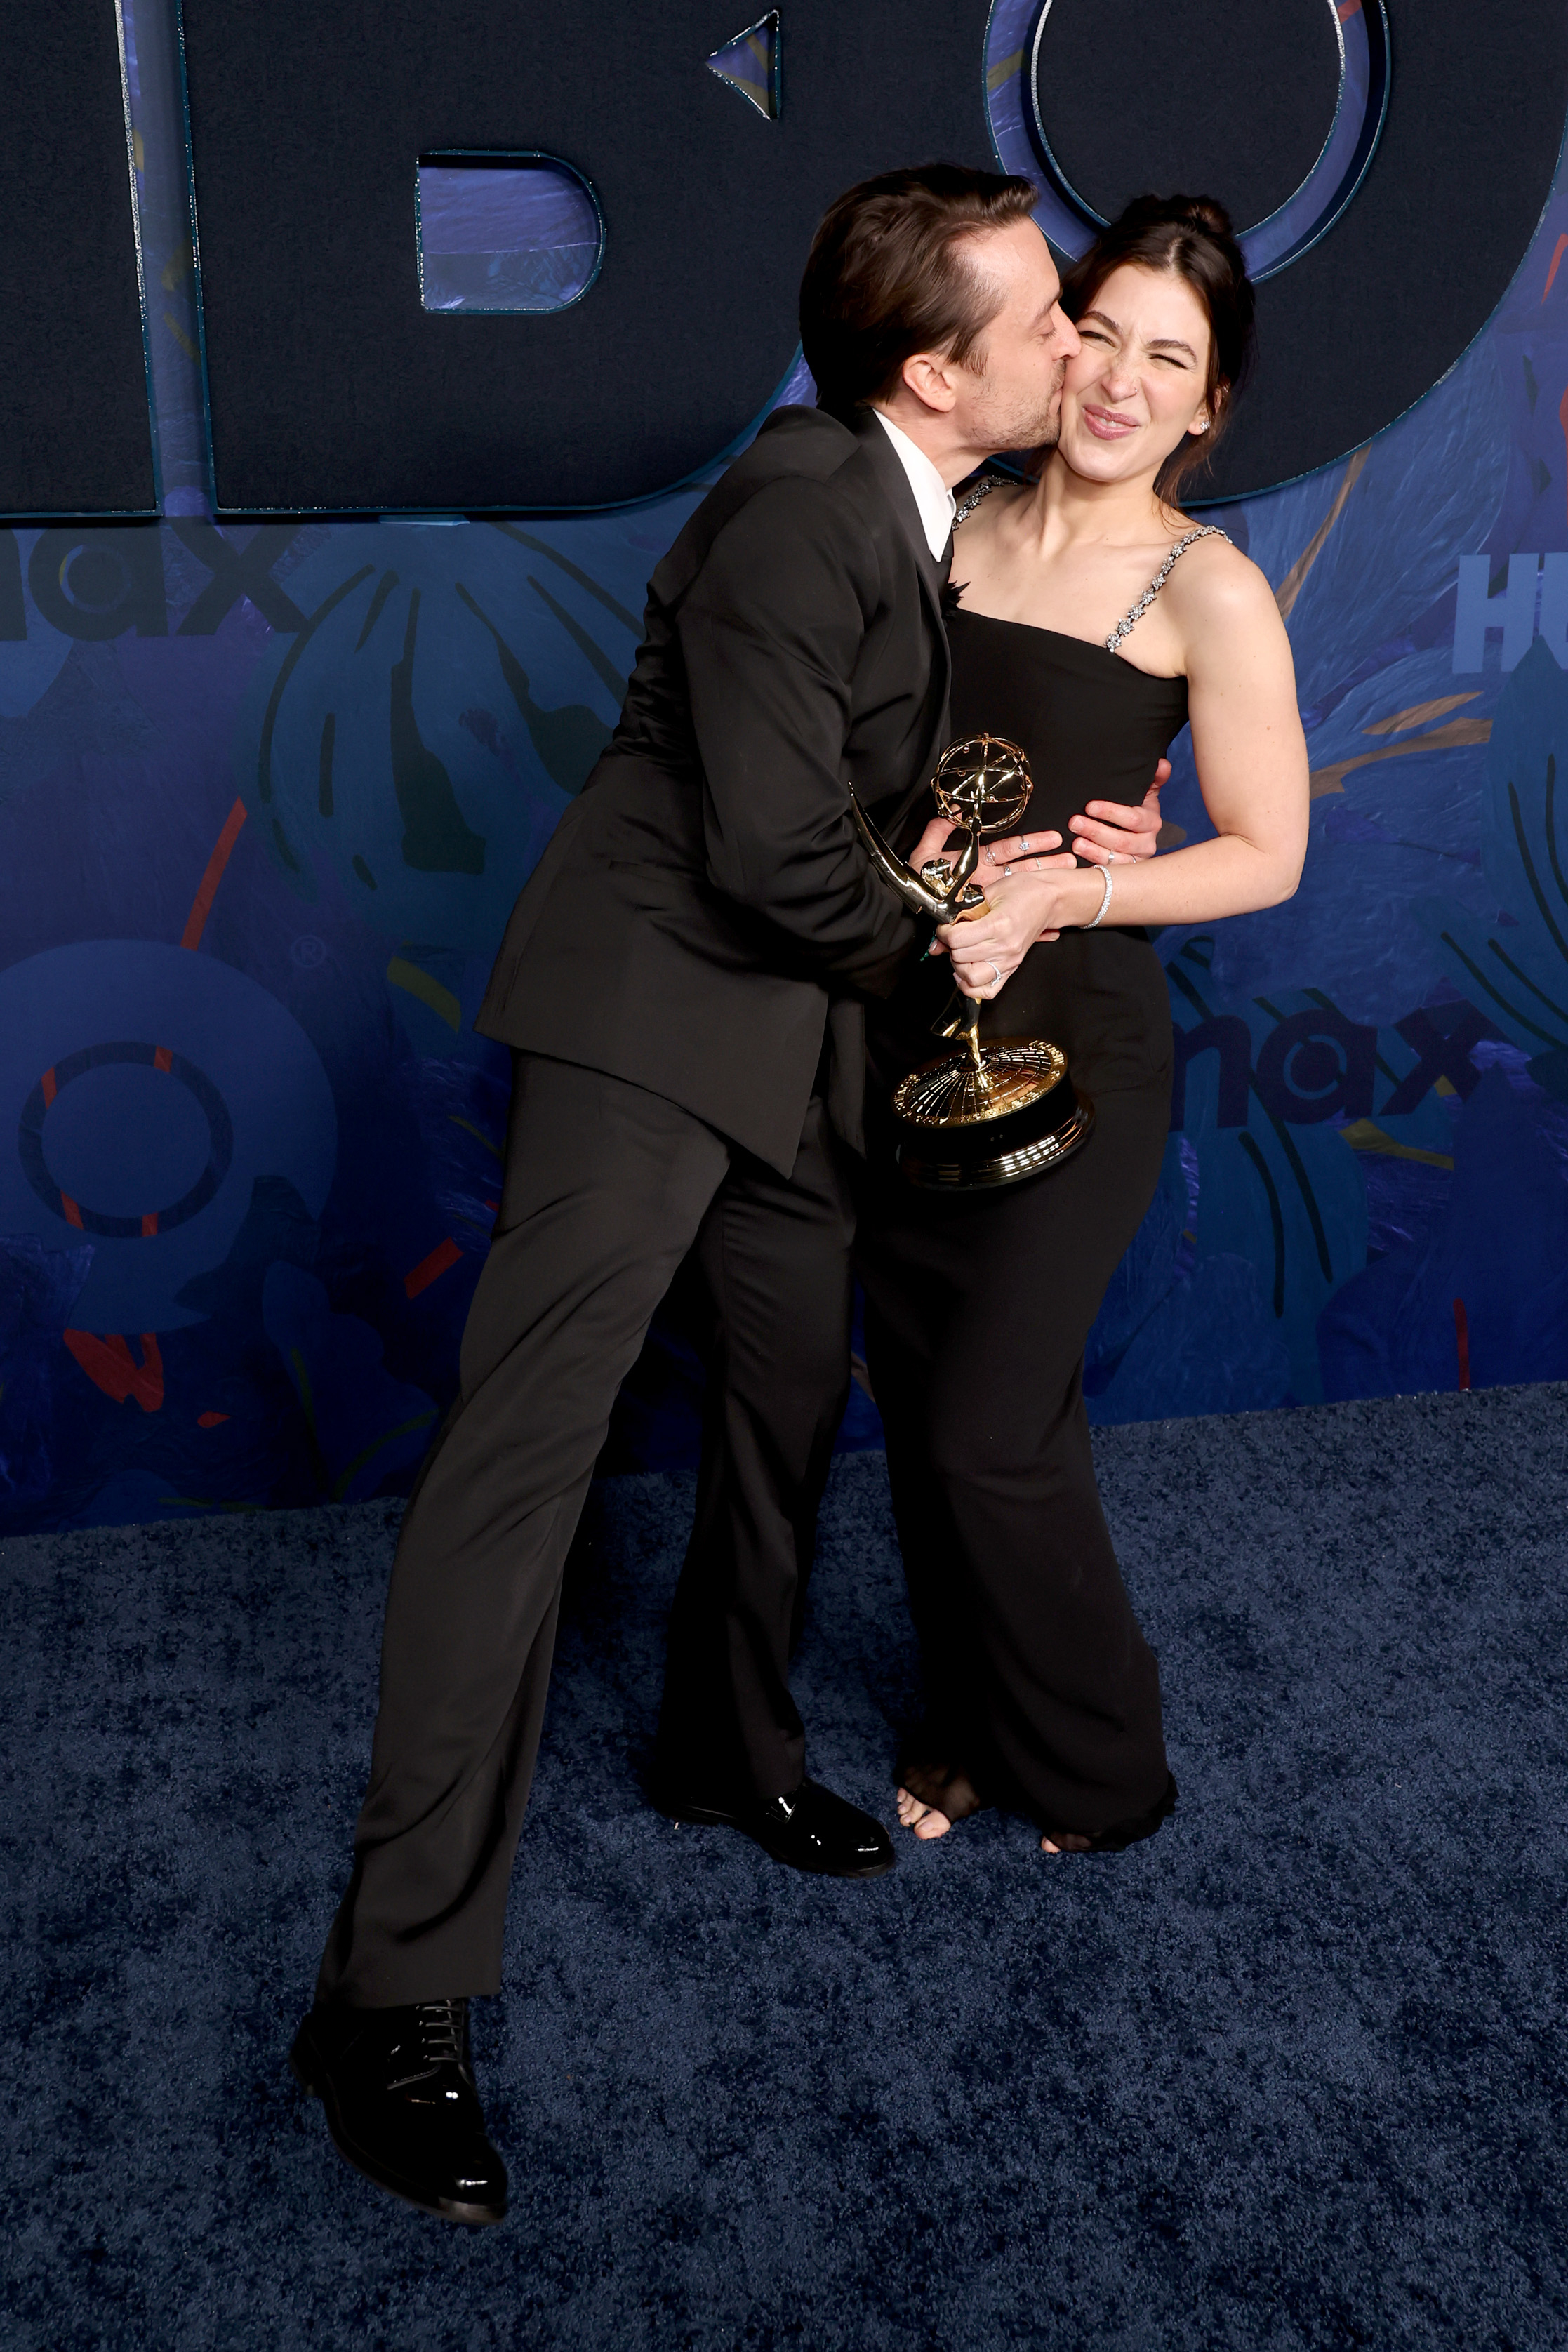 Kieran kisses Jazz on her cheek as he holds his award